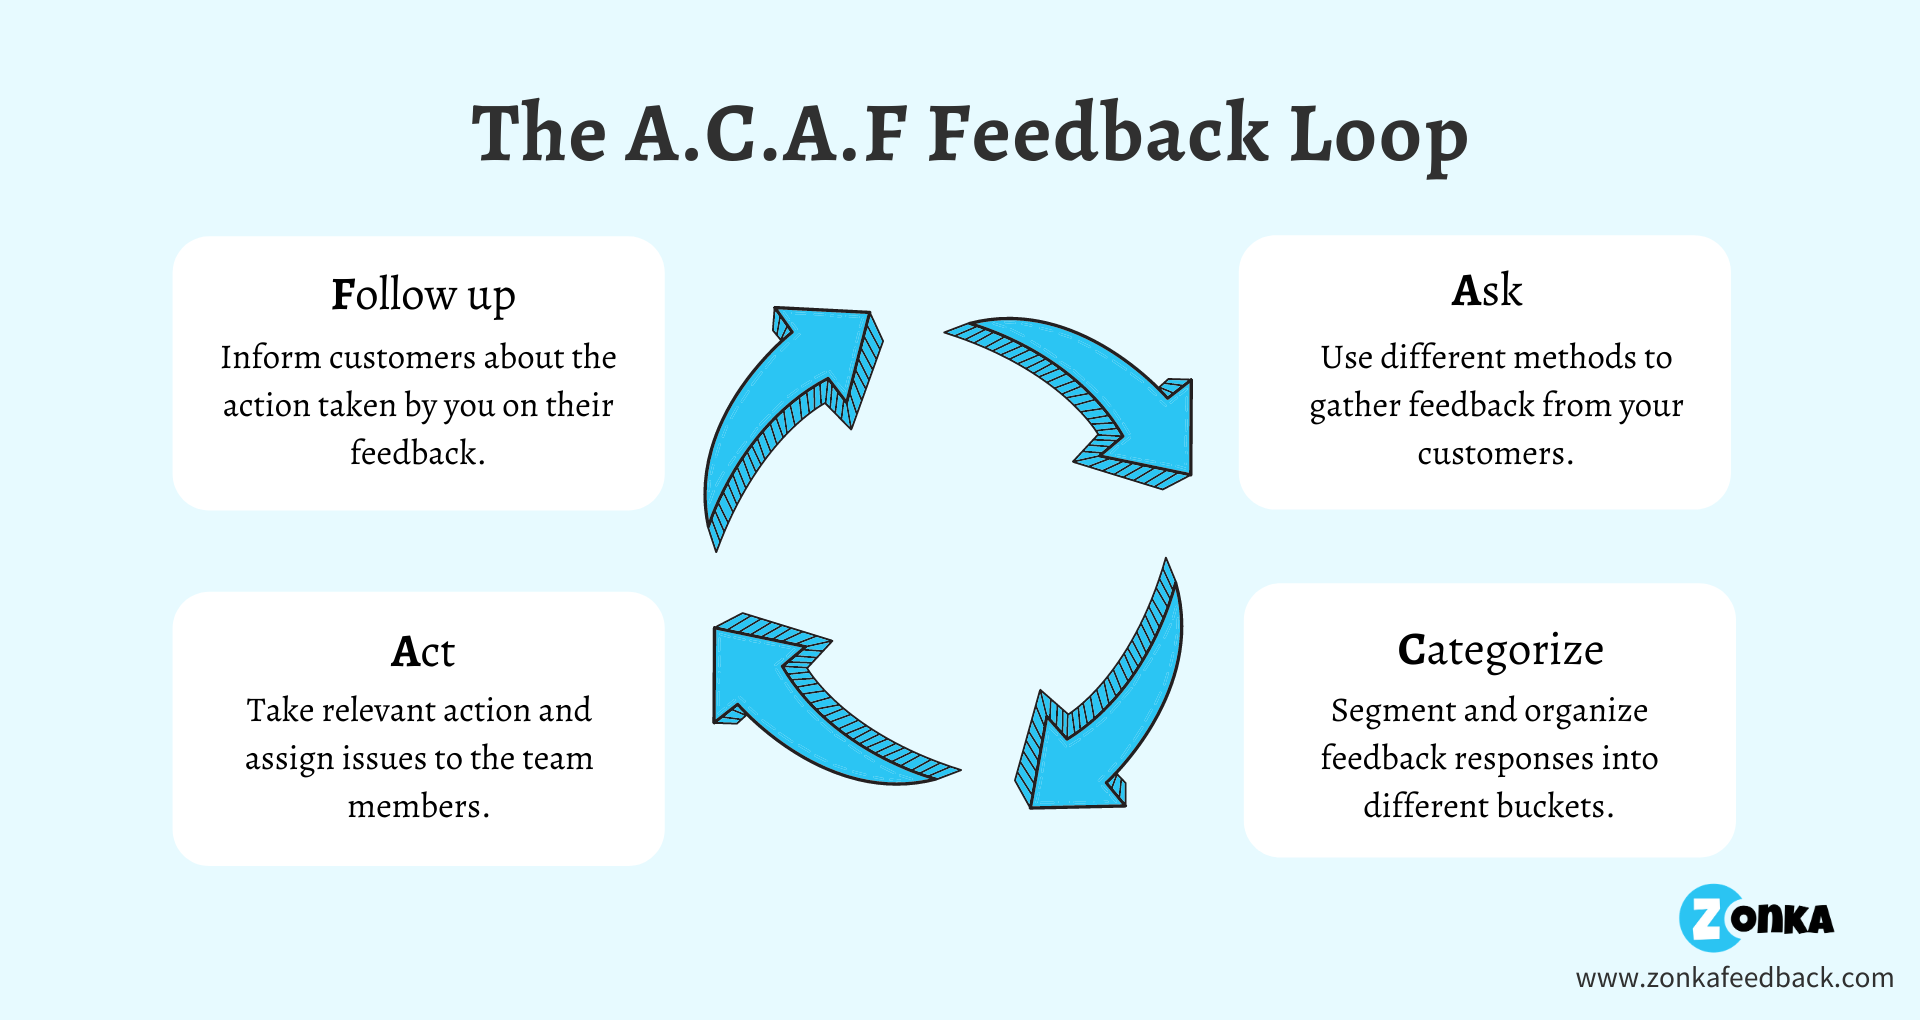 The A.C.A.F Feedback Loop